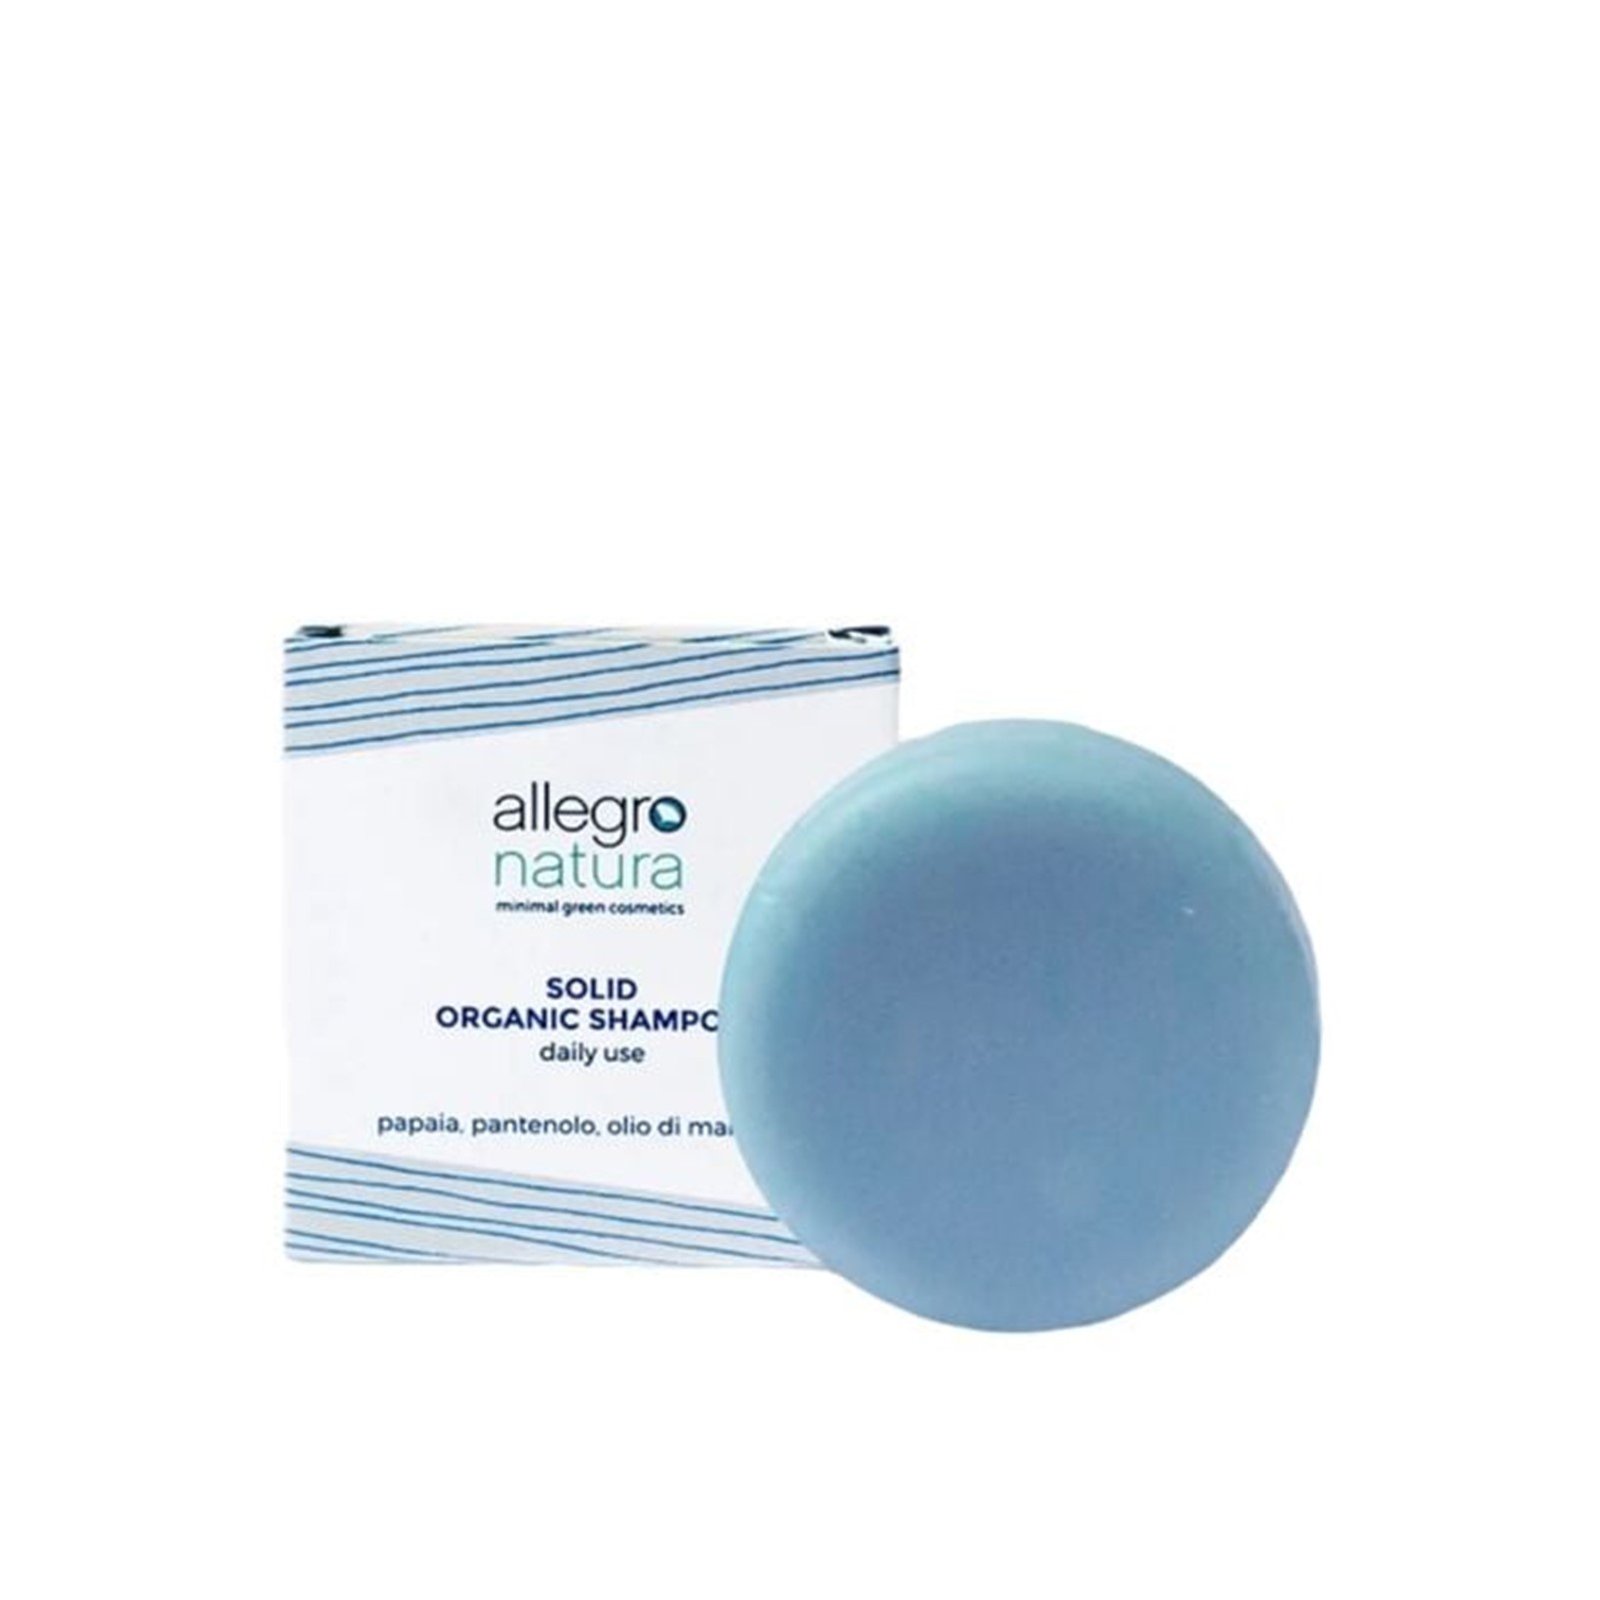 Allegro Natura Solid Organic Shampoo 75g (2.64 oz)